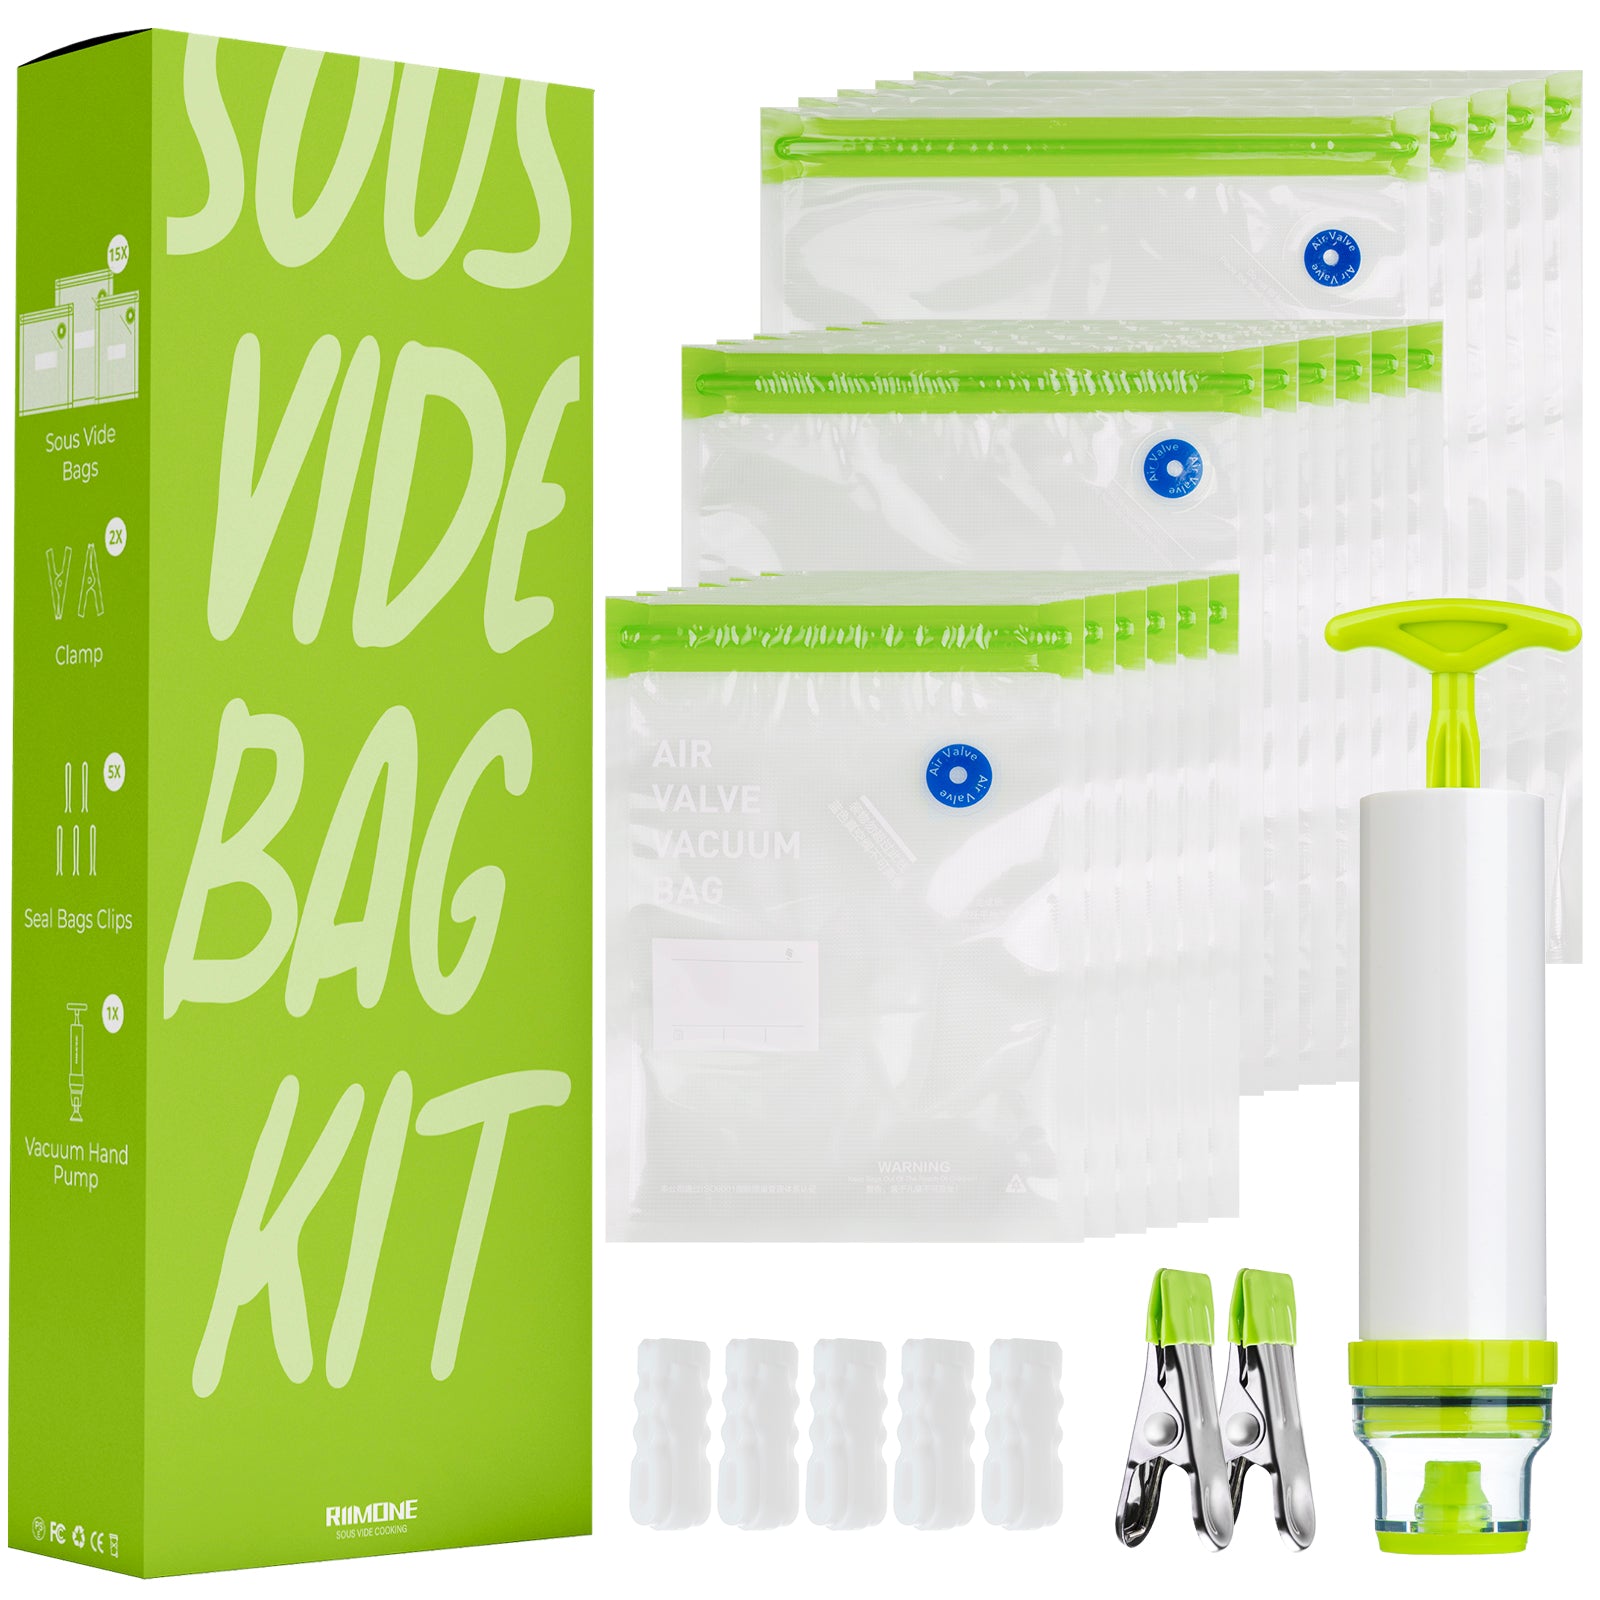 Sous Bags, RIIMONE 15 pack Vide Kits